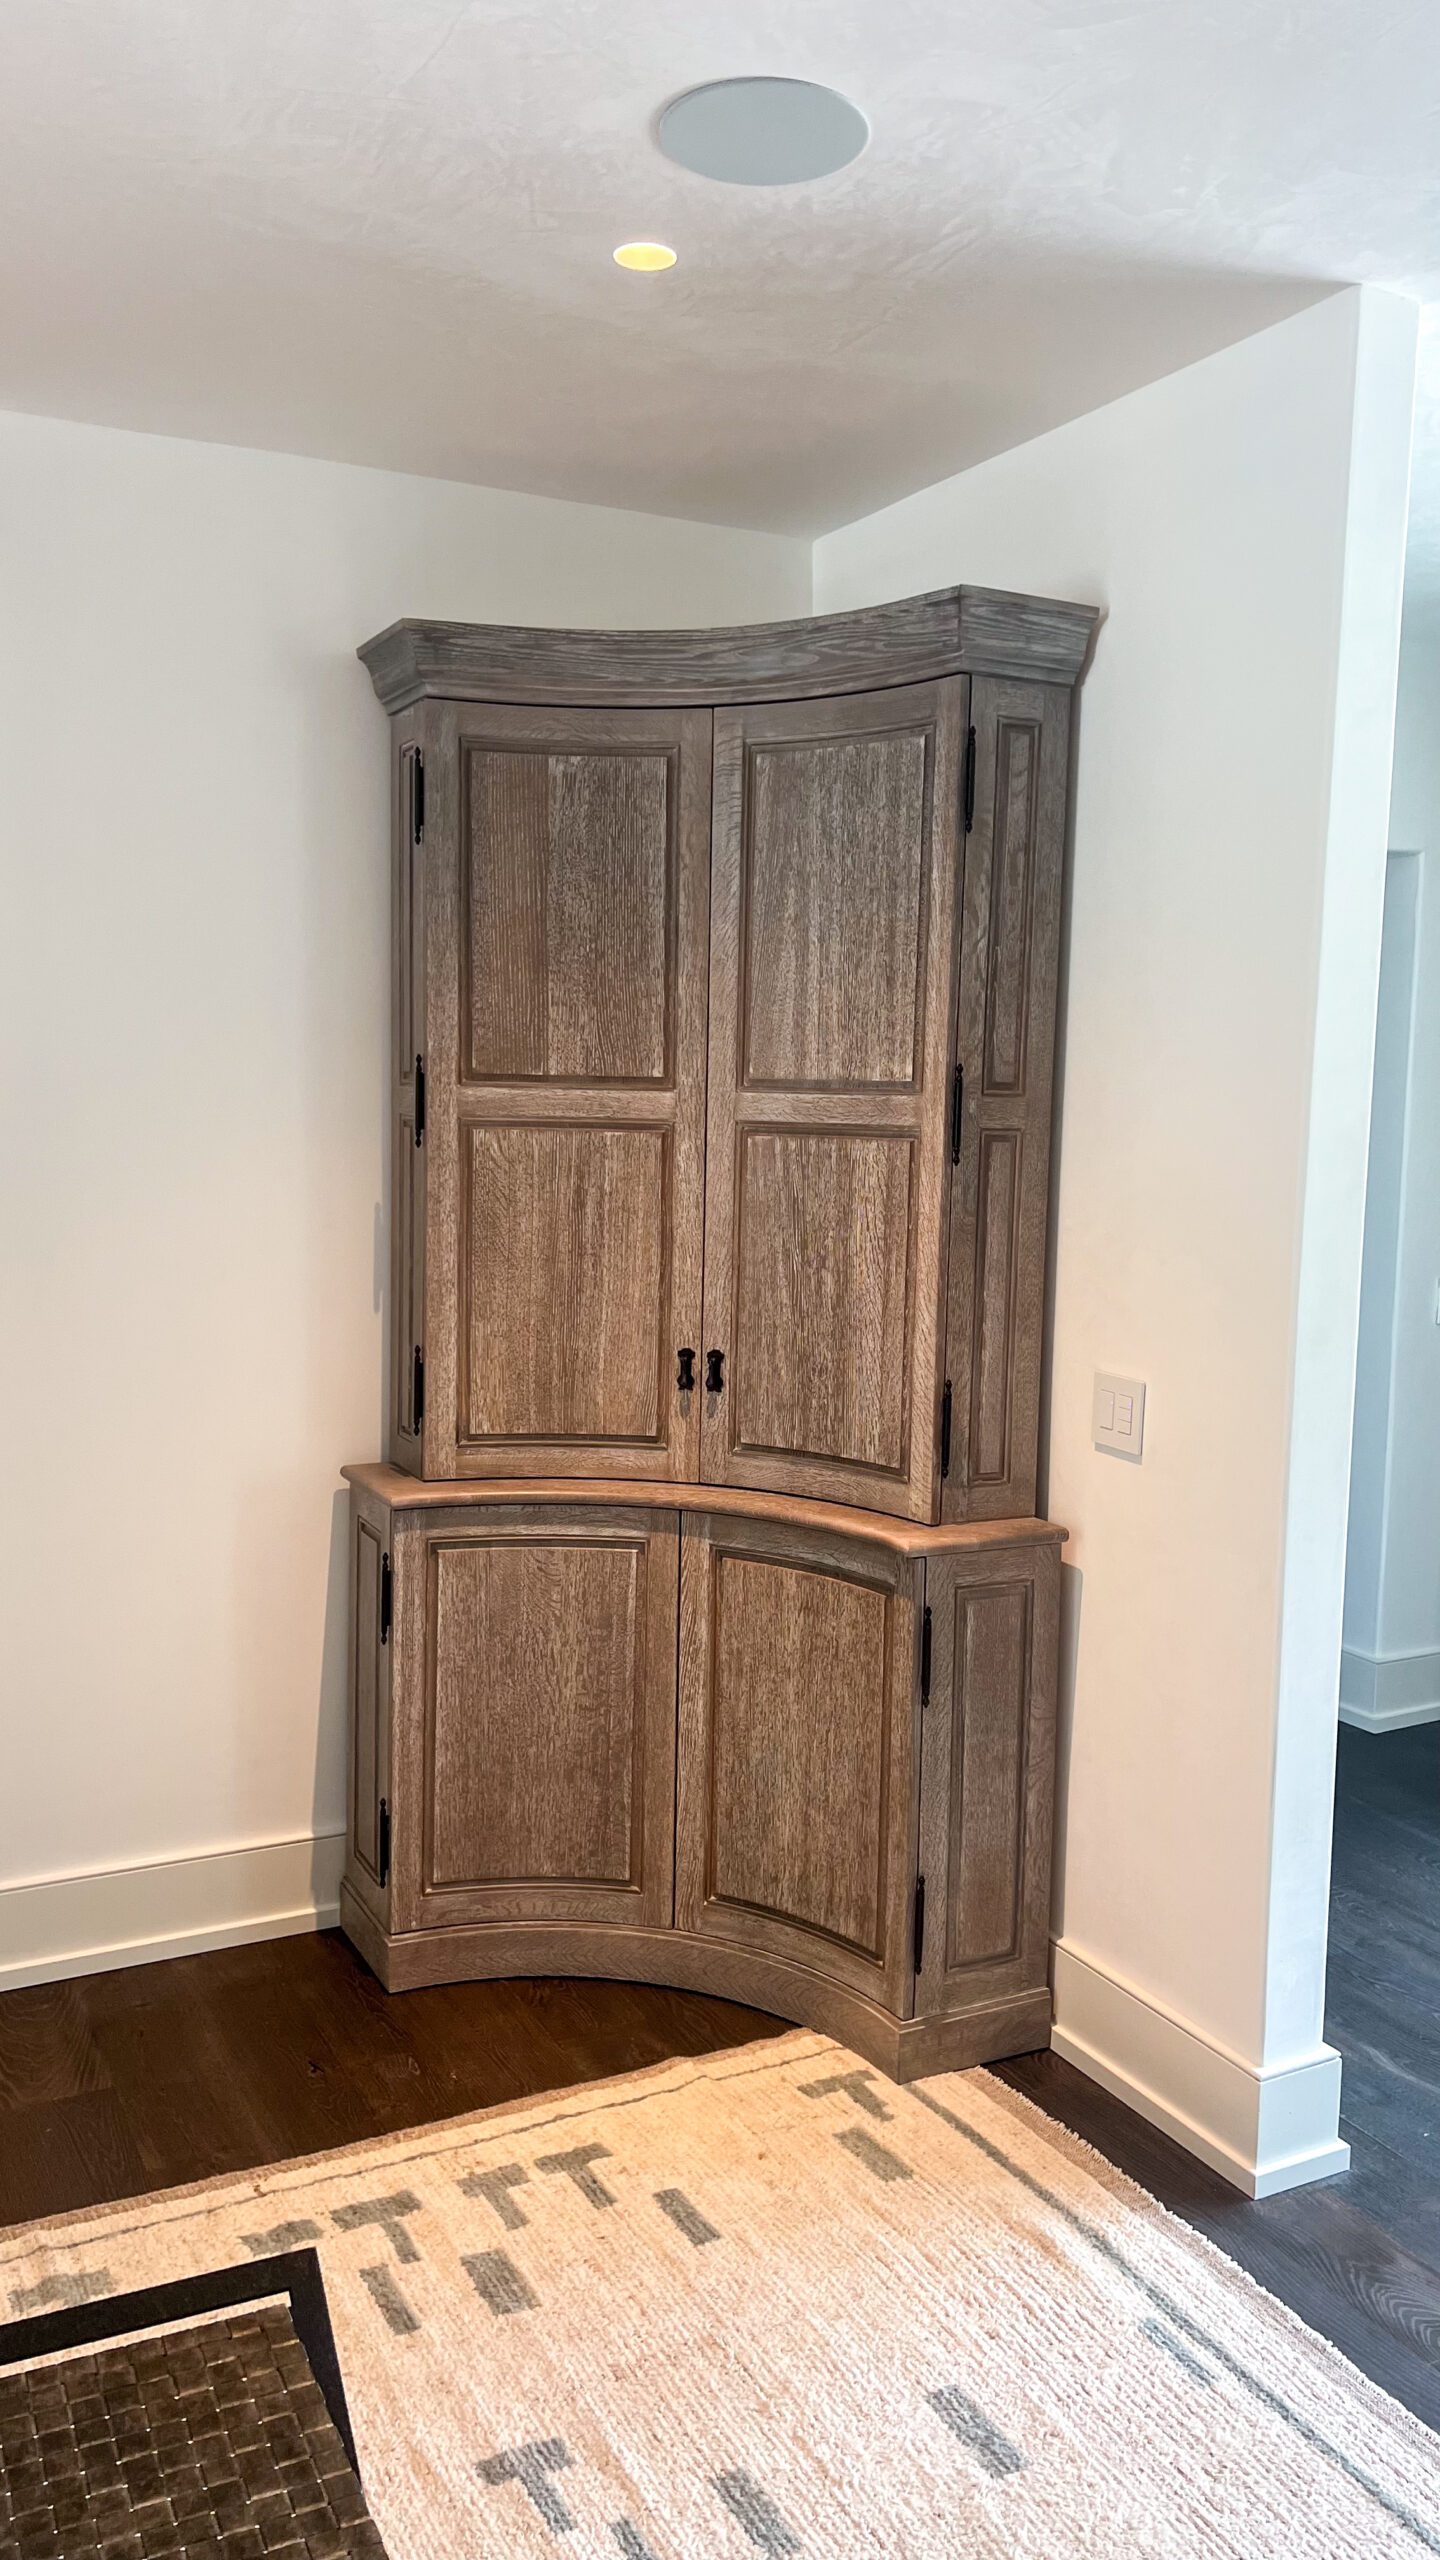 Grayed oak radius front corner cabinets